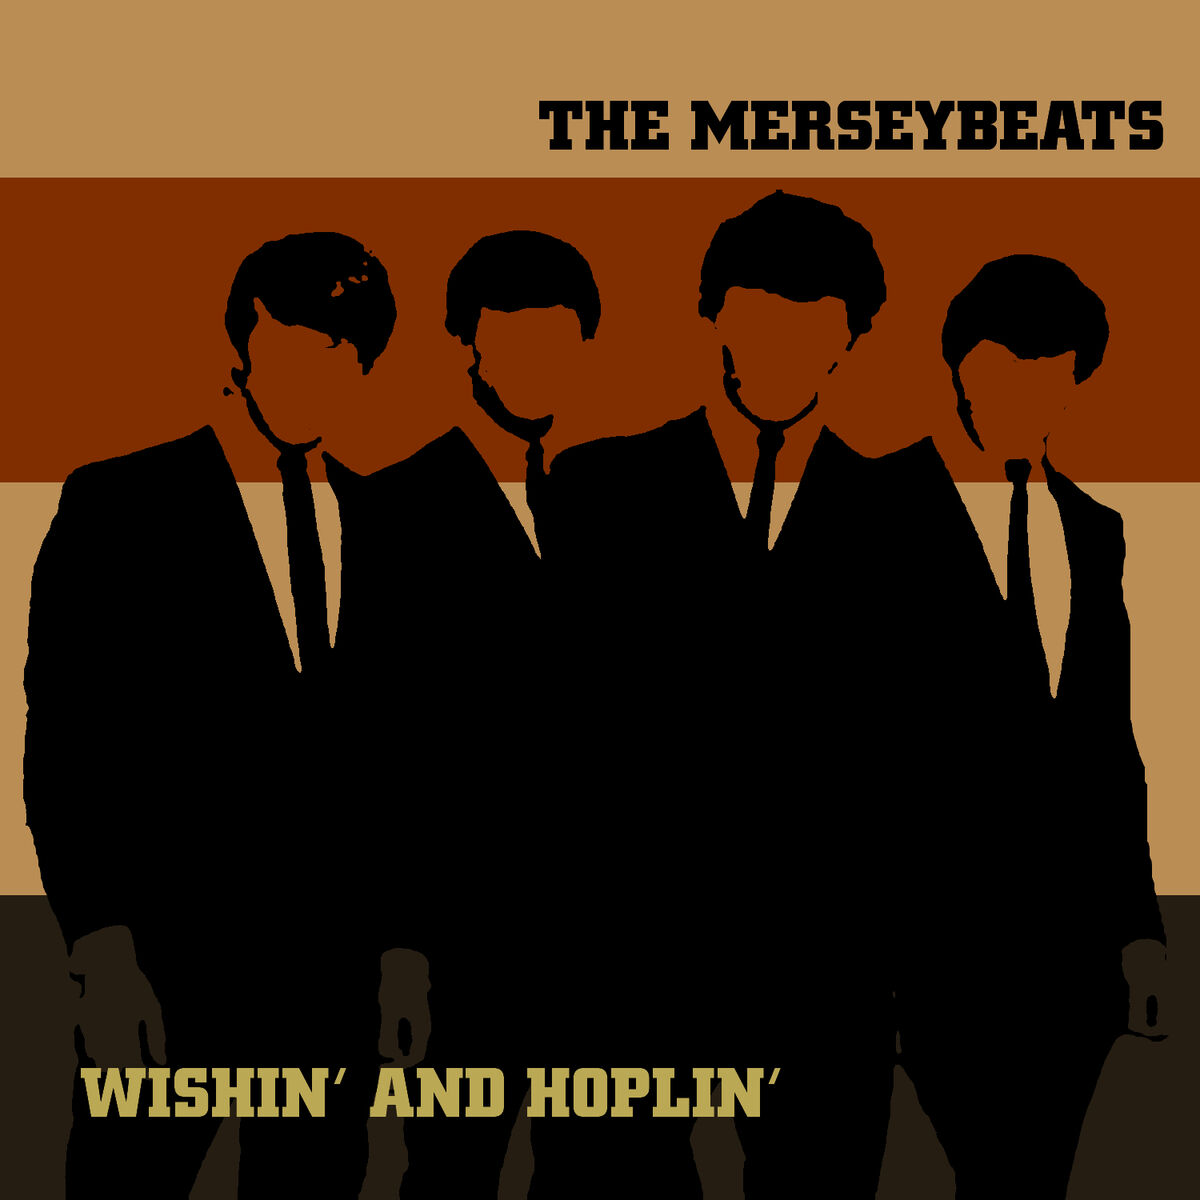 The Merseybeats: albums, songs, playlists | Listen on Deezer